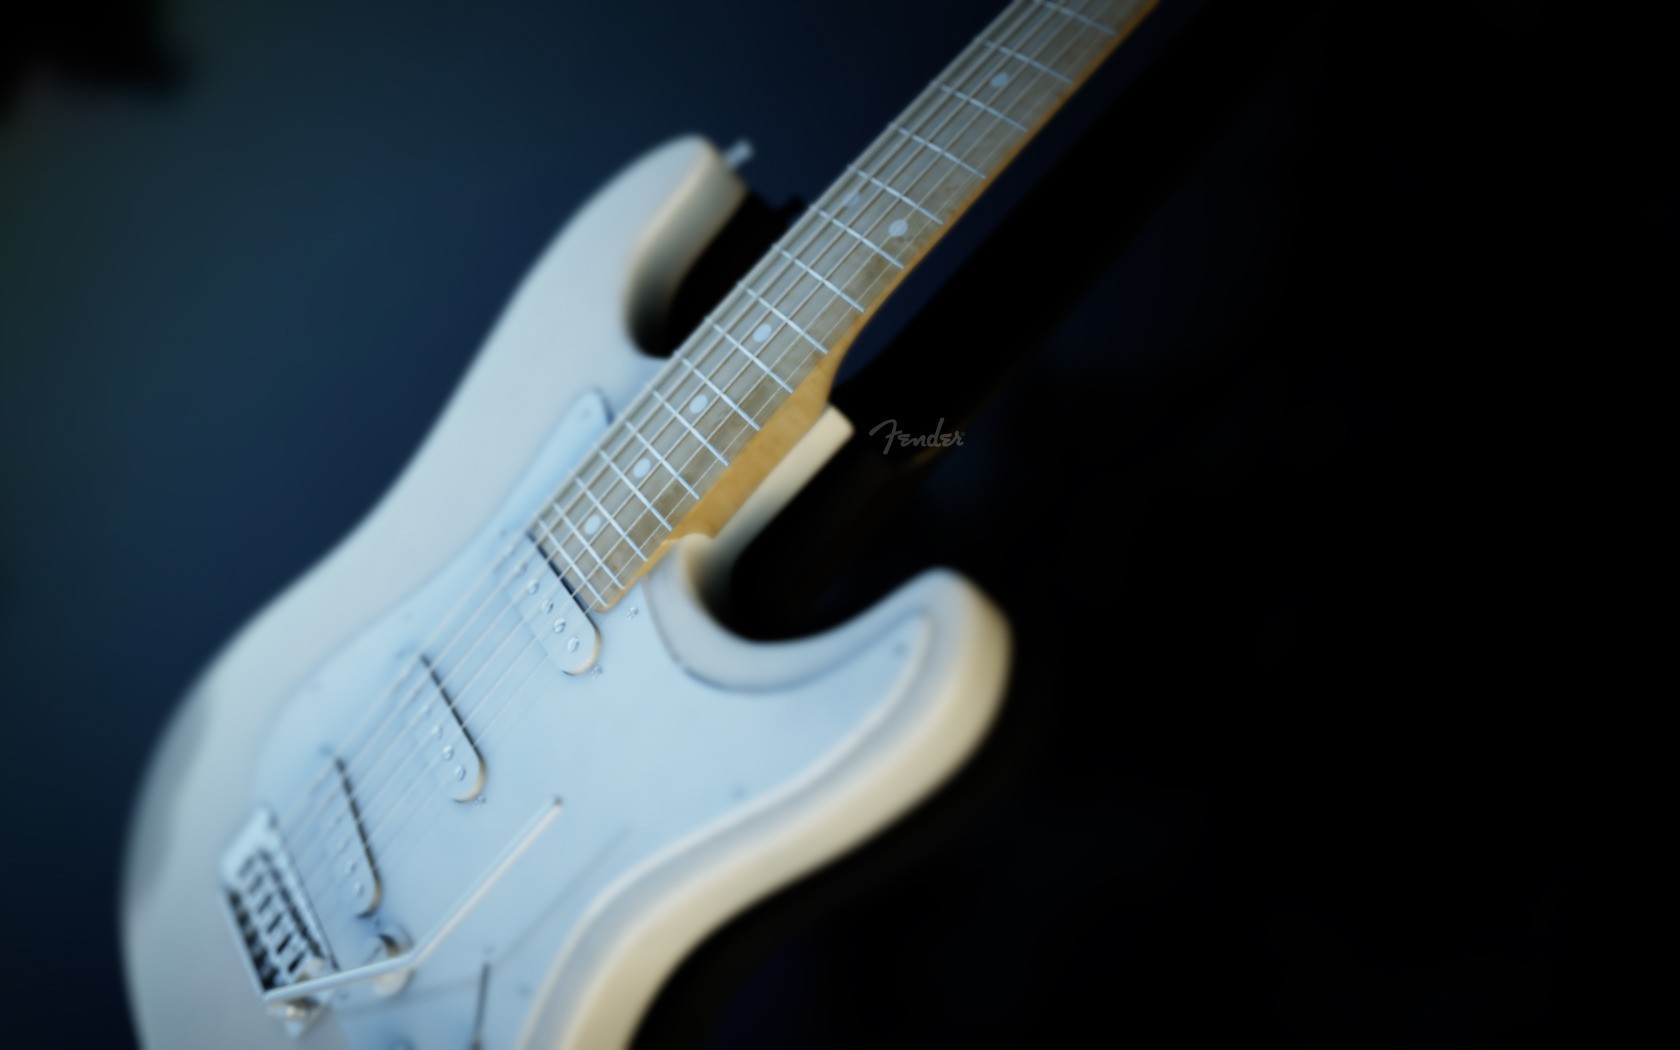 General 1680x1050 music guitar musical instrument Fender